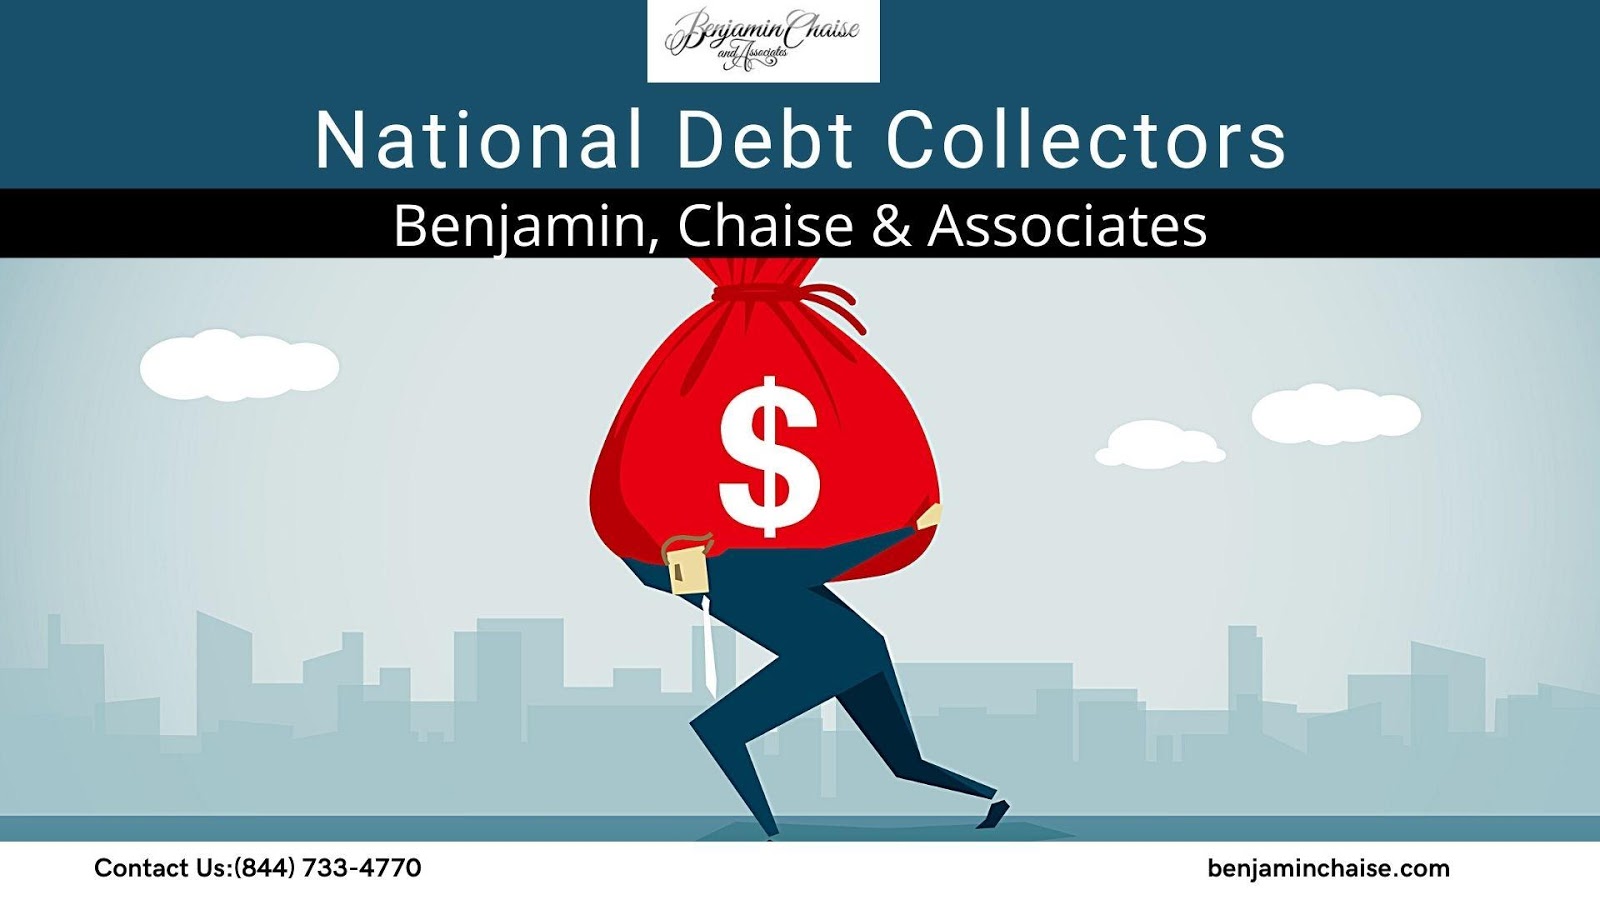 National Debt Collectors near Me